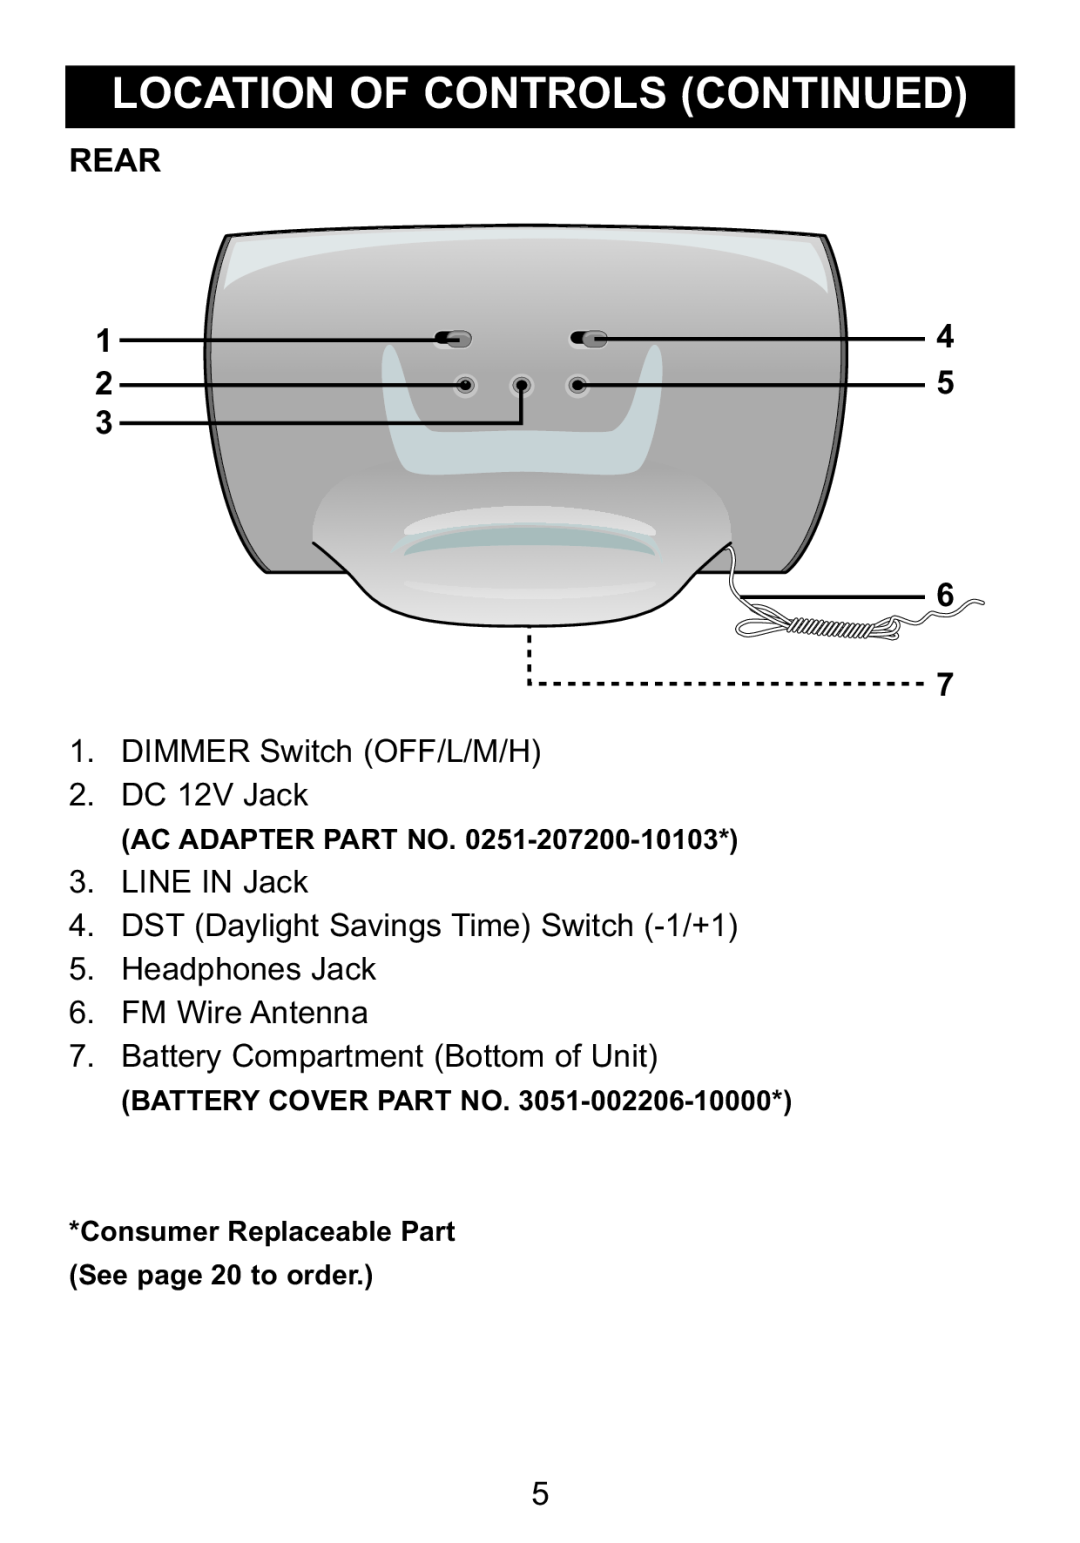 Memorex Mi4014 manual Rear, DIMMER Switch OFF/L/M/H 2. DC 12V Jack, LINE IN Jack 4. DST Daylight Savings Time Switch -1/+1 